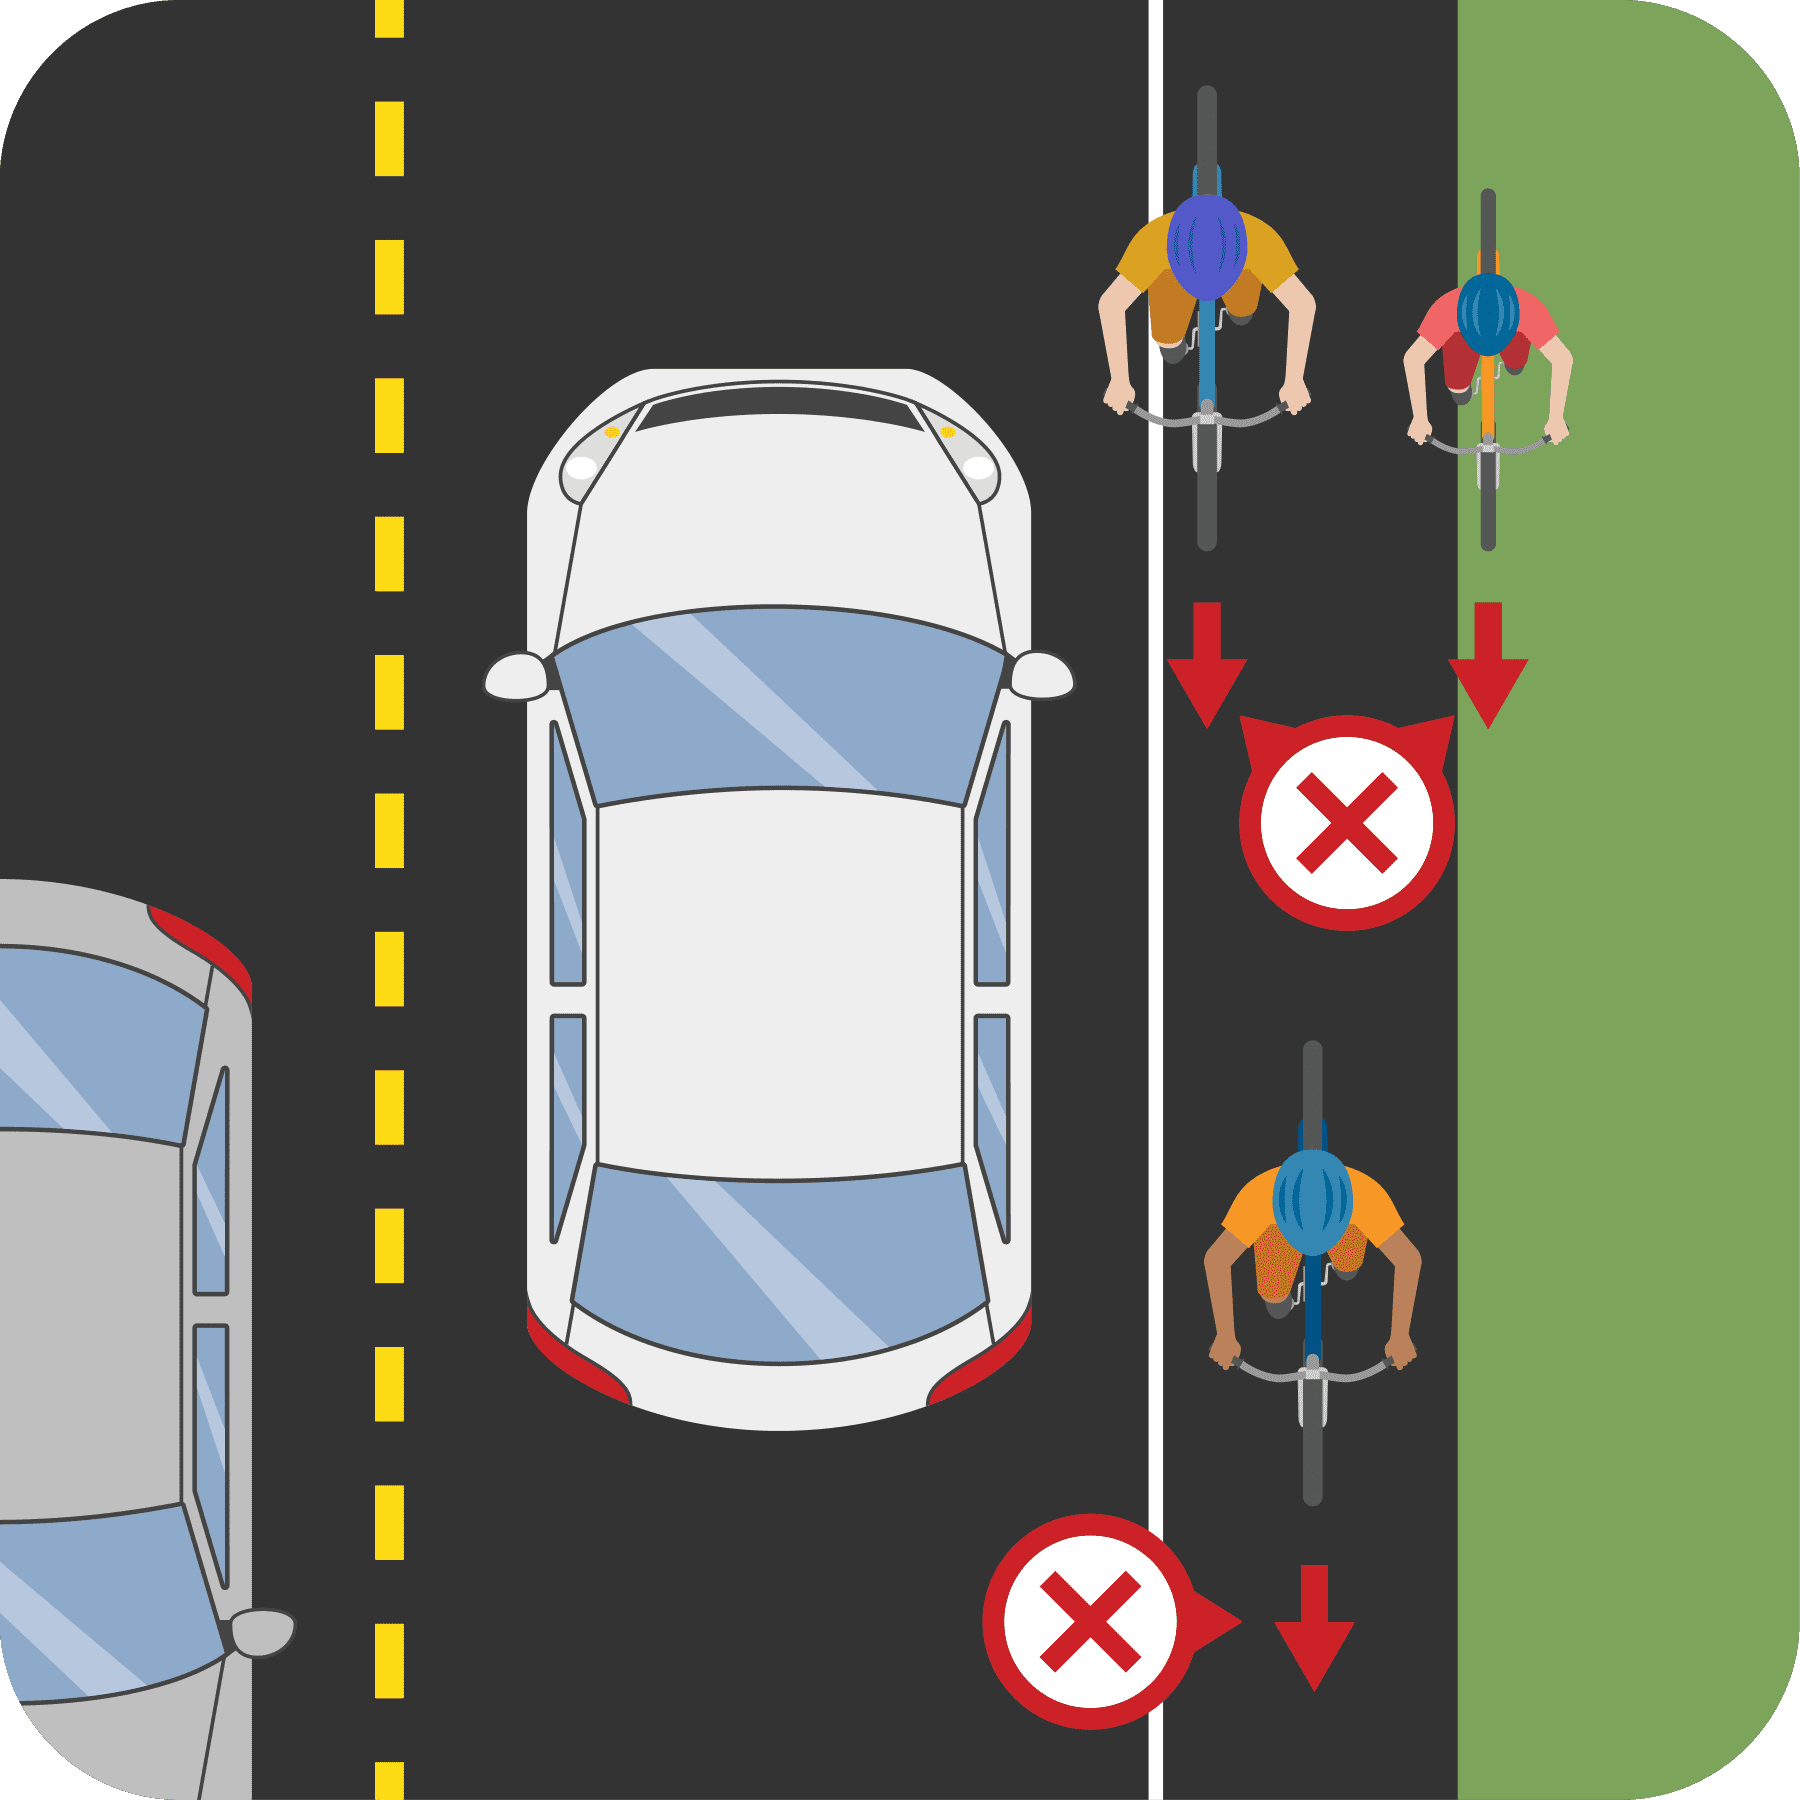 Cycling against traffic.